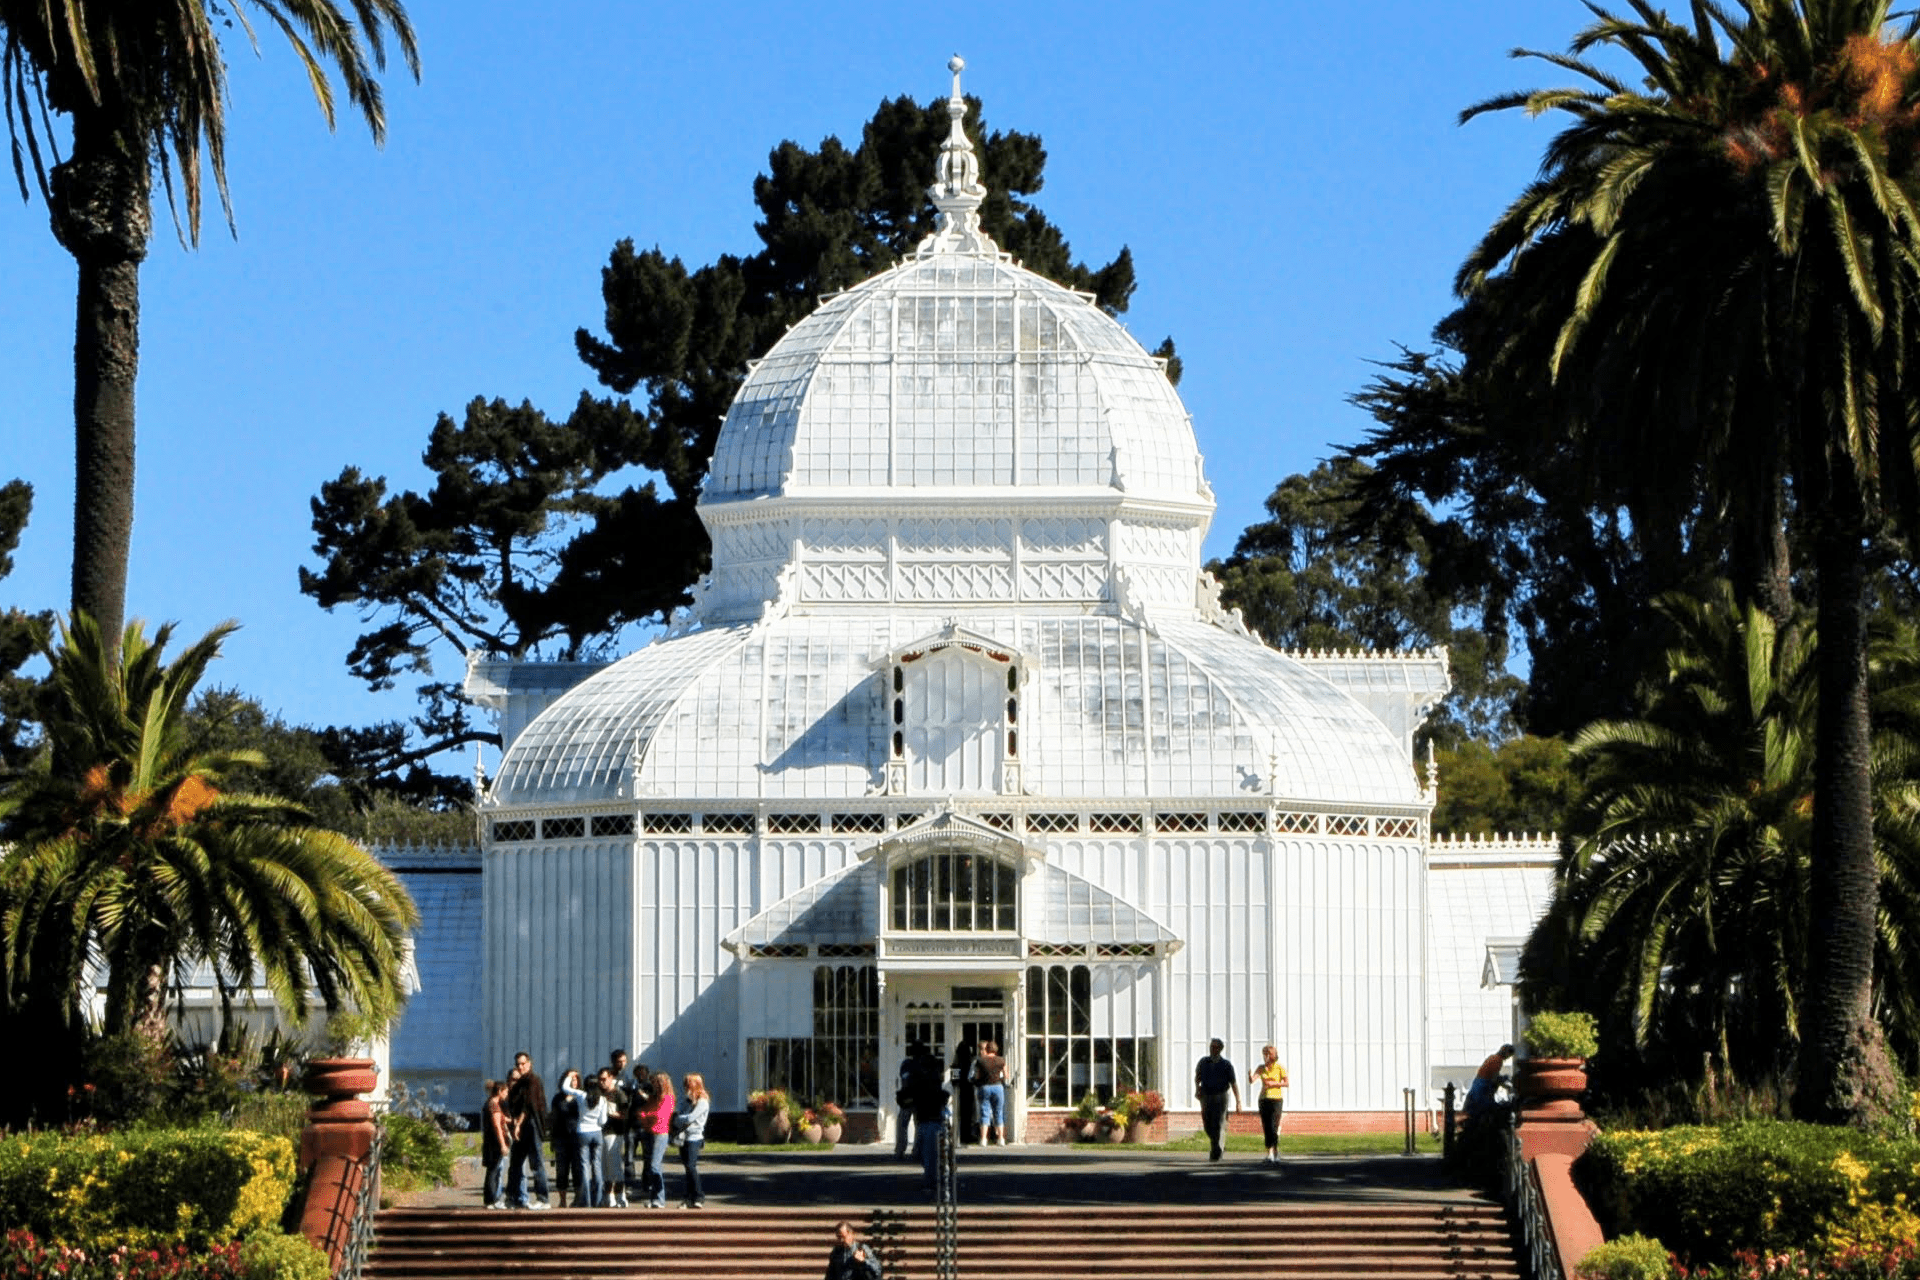 Conservatory of Flowers, Golden Gate Park, San Francisco